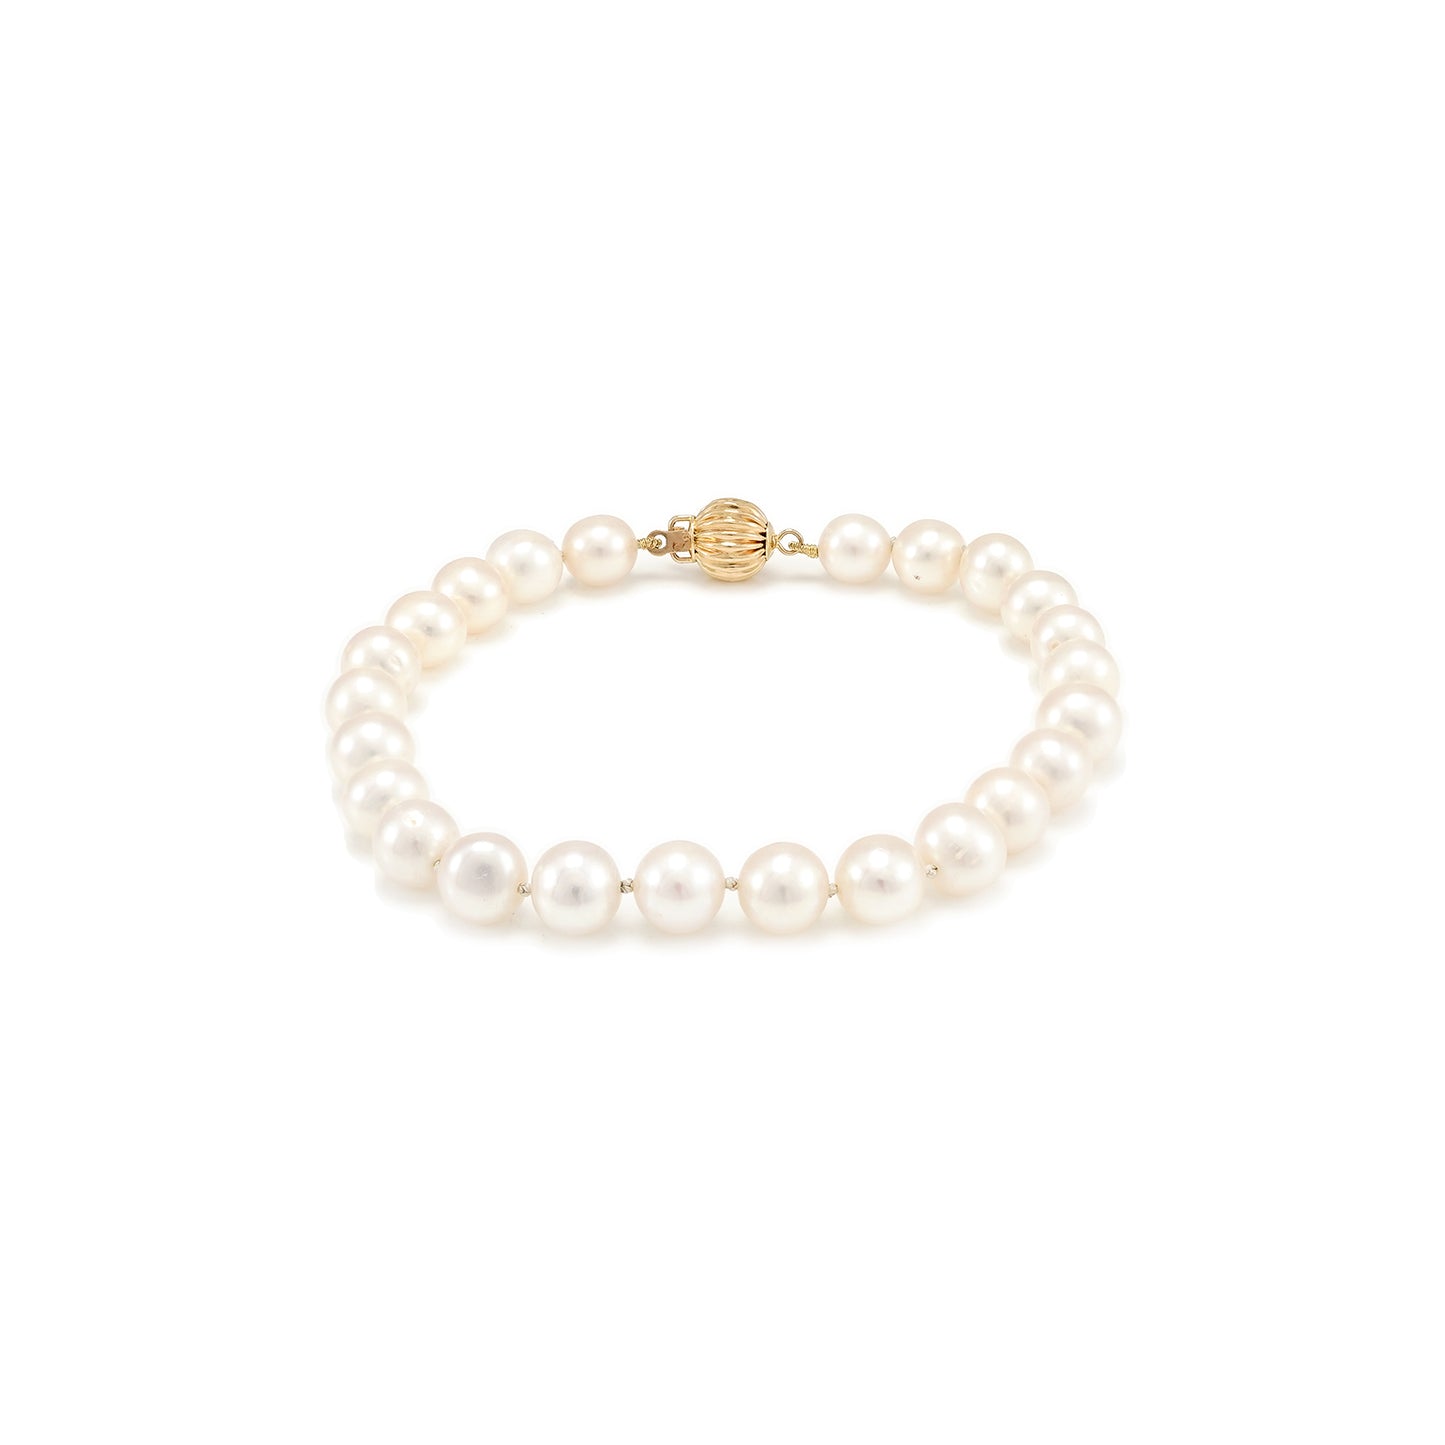 Pearl bracelet gold clasp yellow gold 14K women's jewelry bracelet pearl bracelet